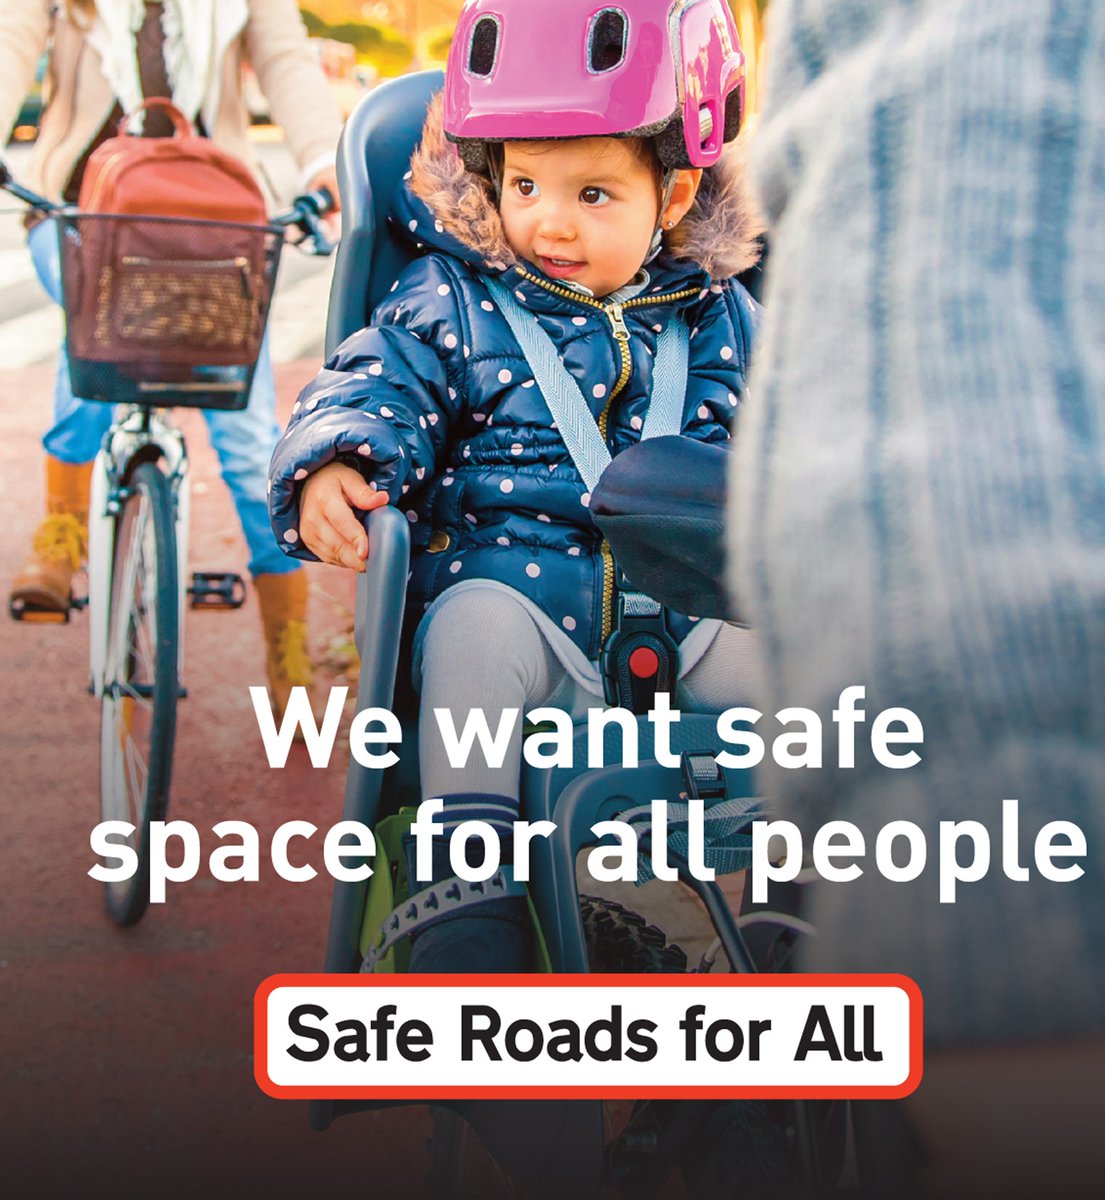 @Brakecharity standing alongside @AirAmbulancesUK @SafeRoadDesign @NewsfromTRL @RamblersGB @PACTS @BikeabilityUK @BicycleAssoc @sustrans @mastonline @reedmobility launching UK's Safe Roads for All Alliance - read saferoadsforall.org #saferoadsforall